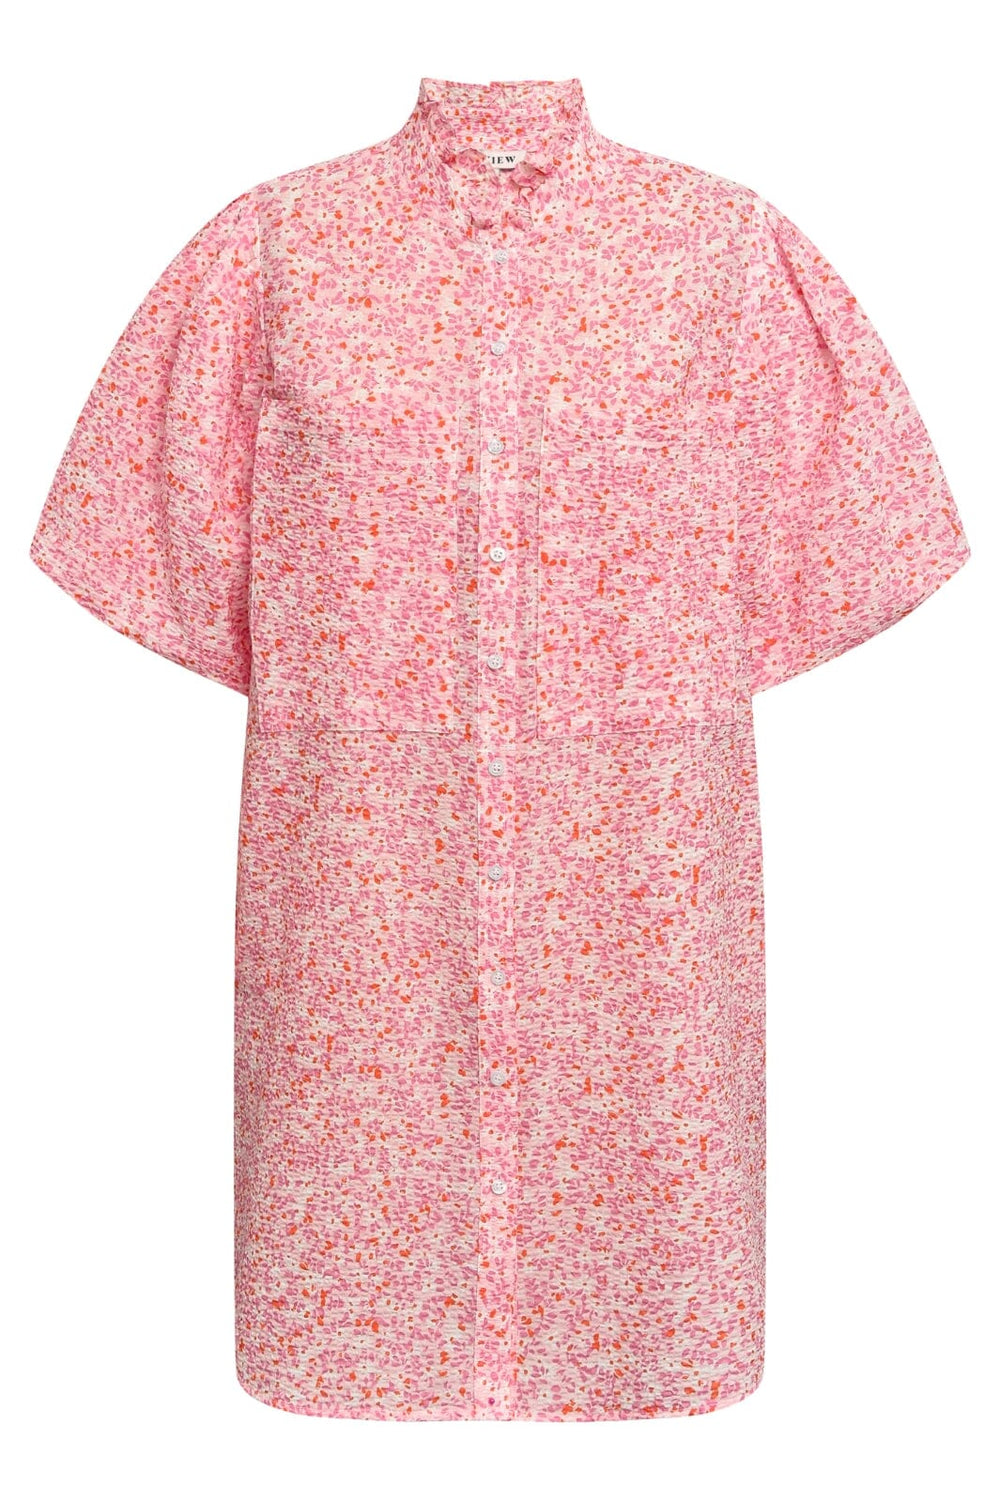 Forudbestilling - A-VIEW - Tiffany Dress - 351 Pink Printet (Maj) Kjoler 